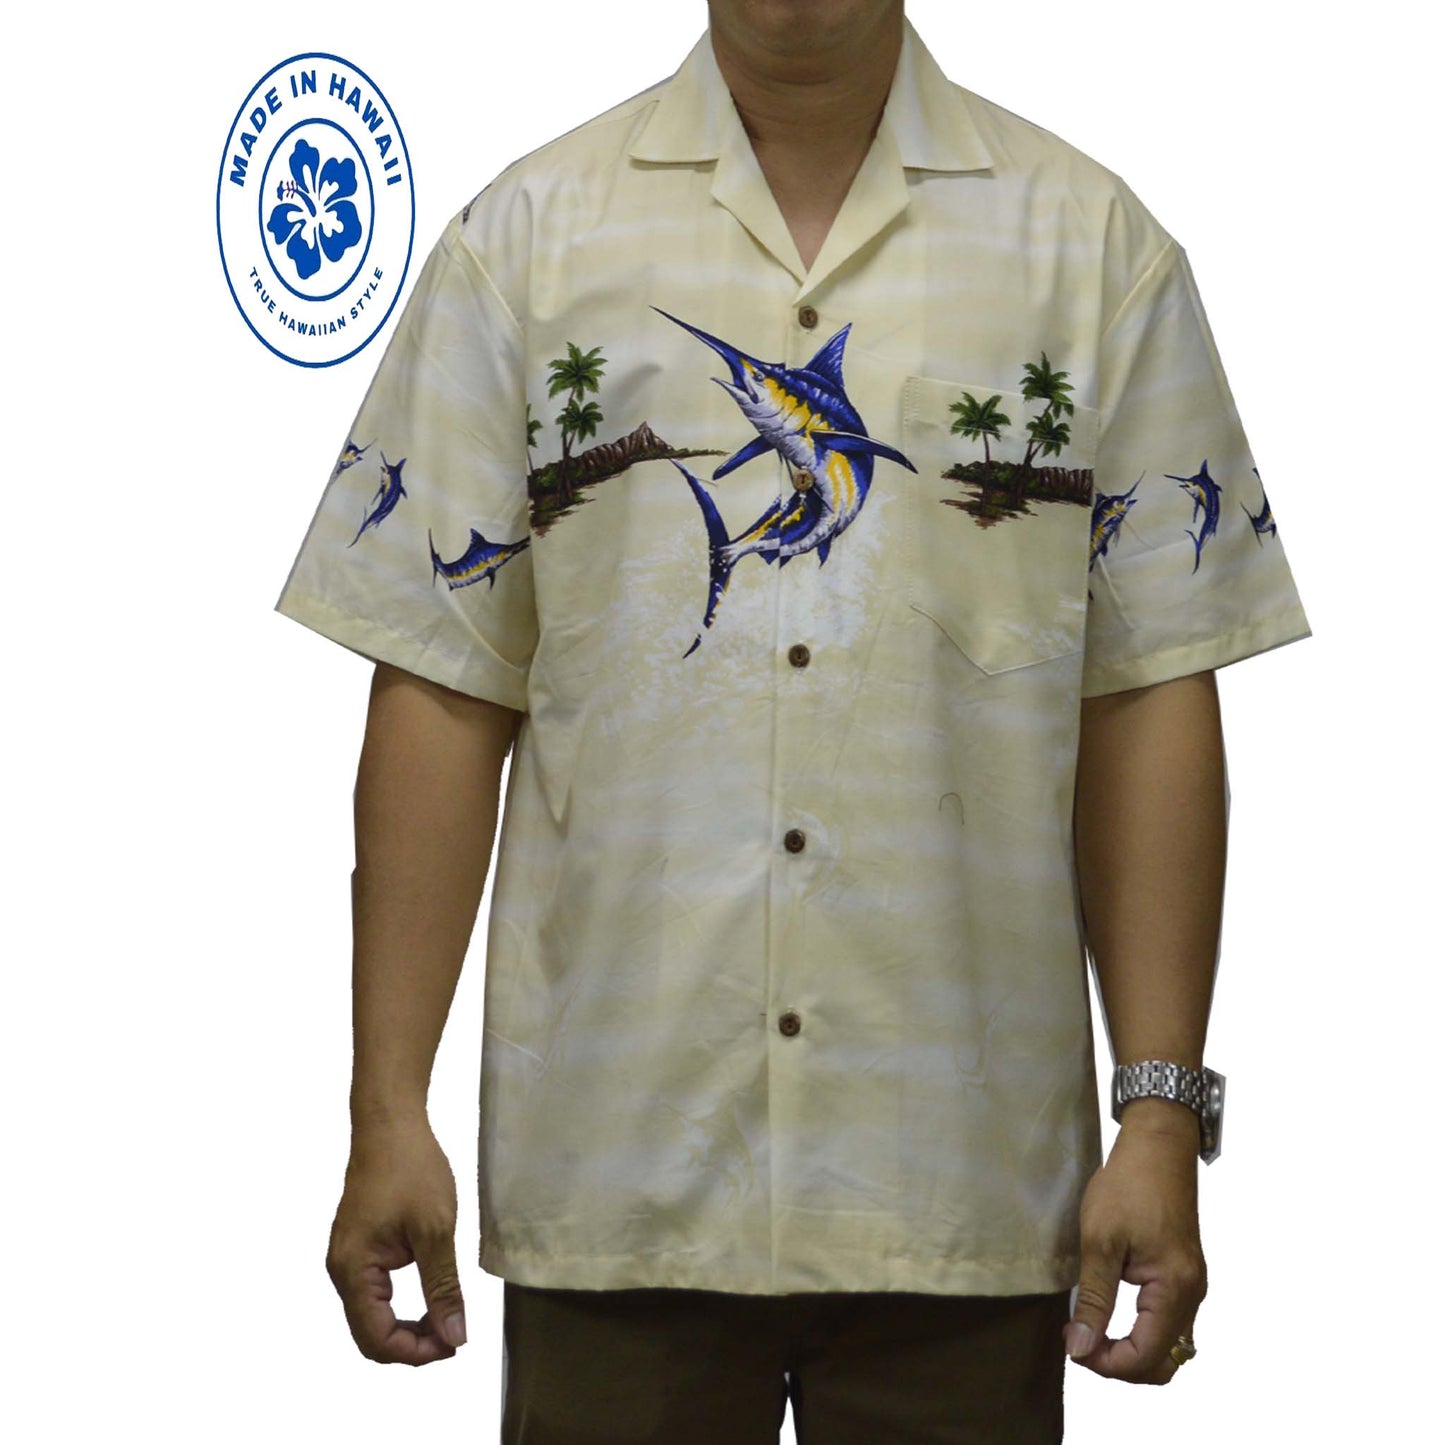 Ky's Hawaiian Cotton Shirt Marlin Breeze - White